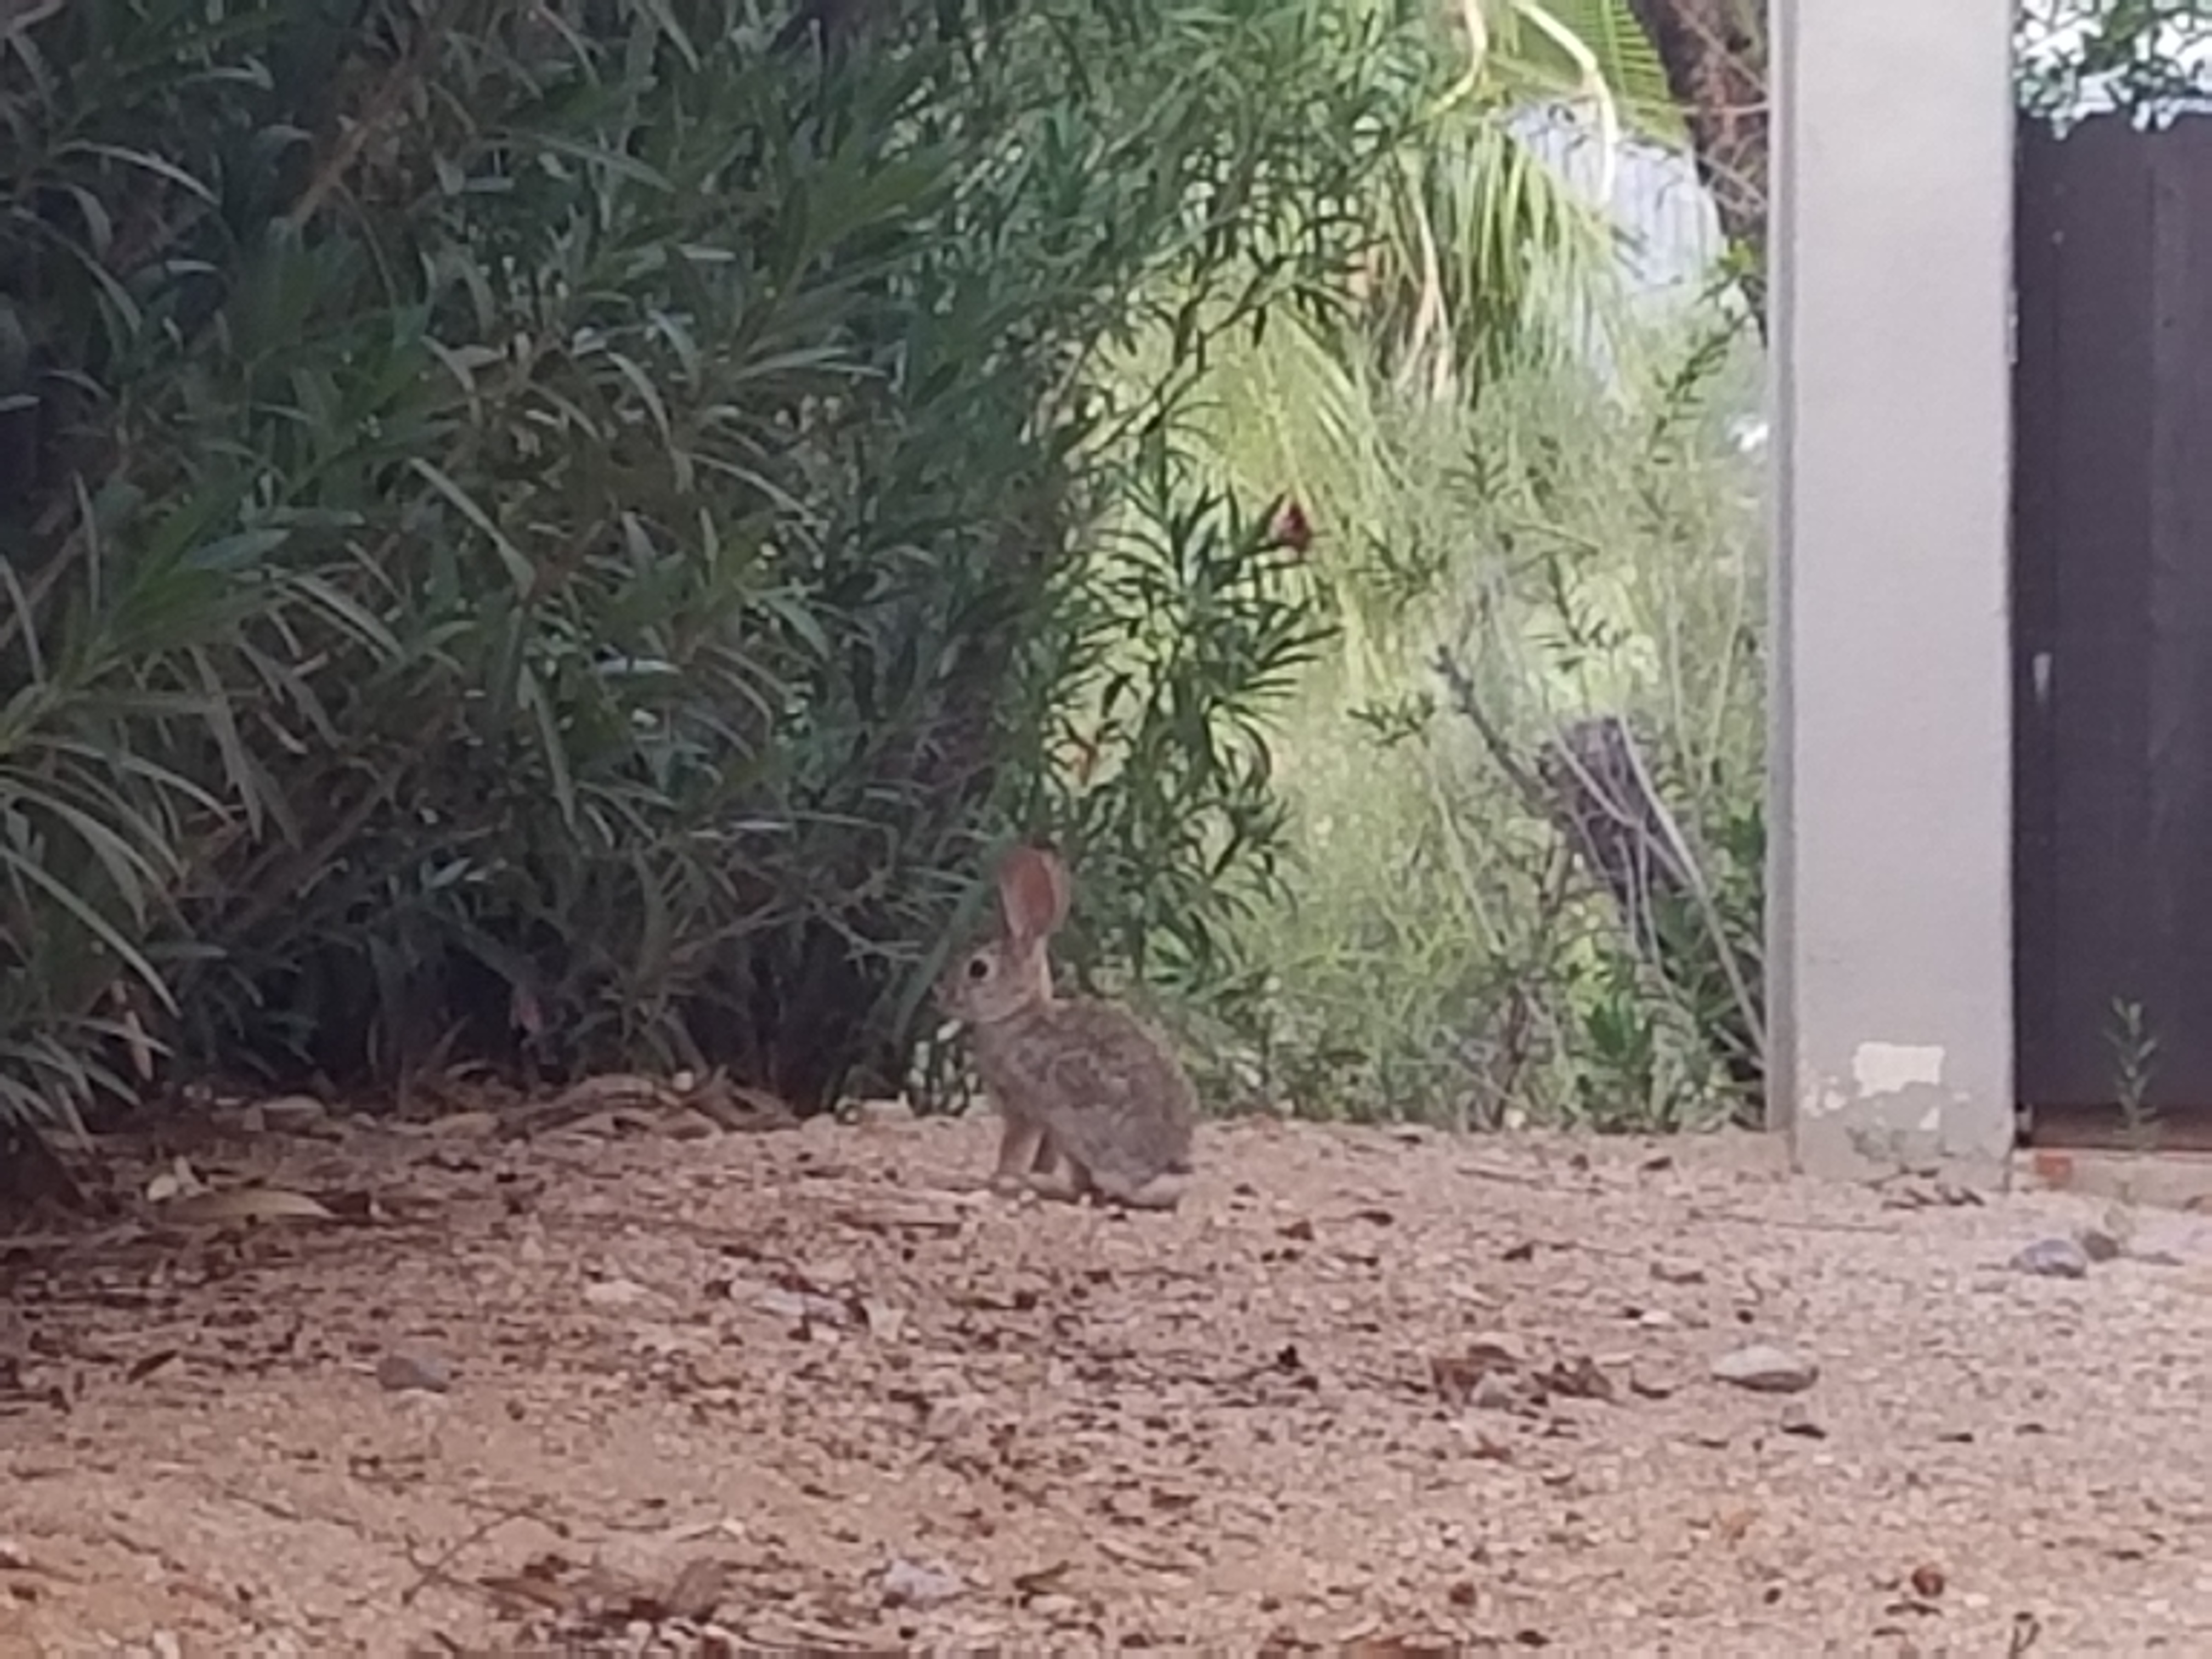 rabbit near nutella sticks